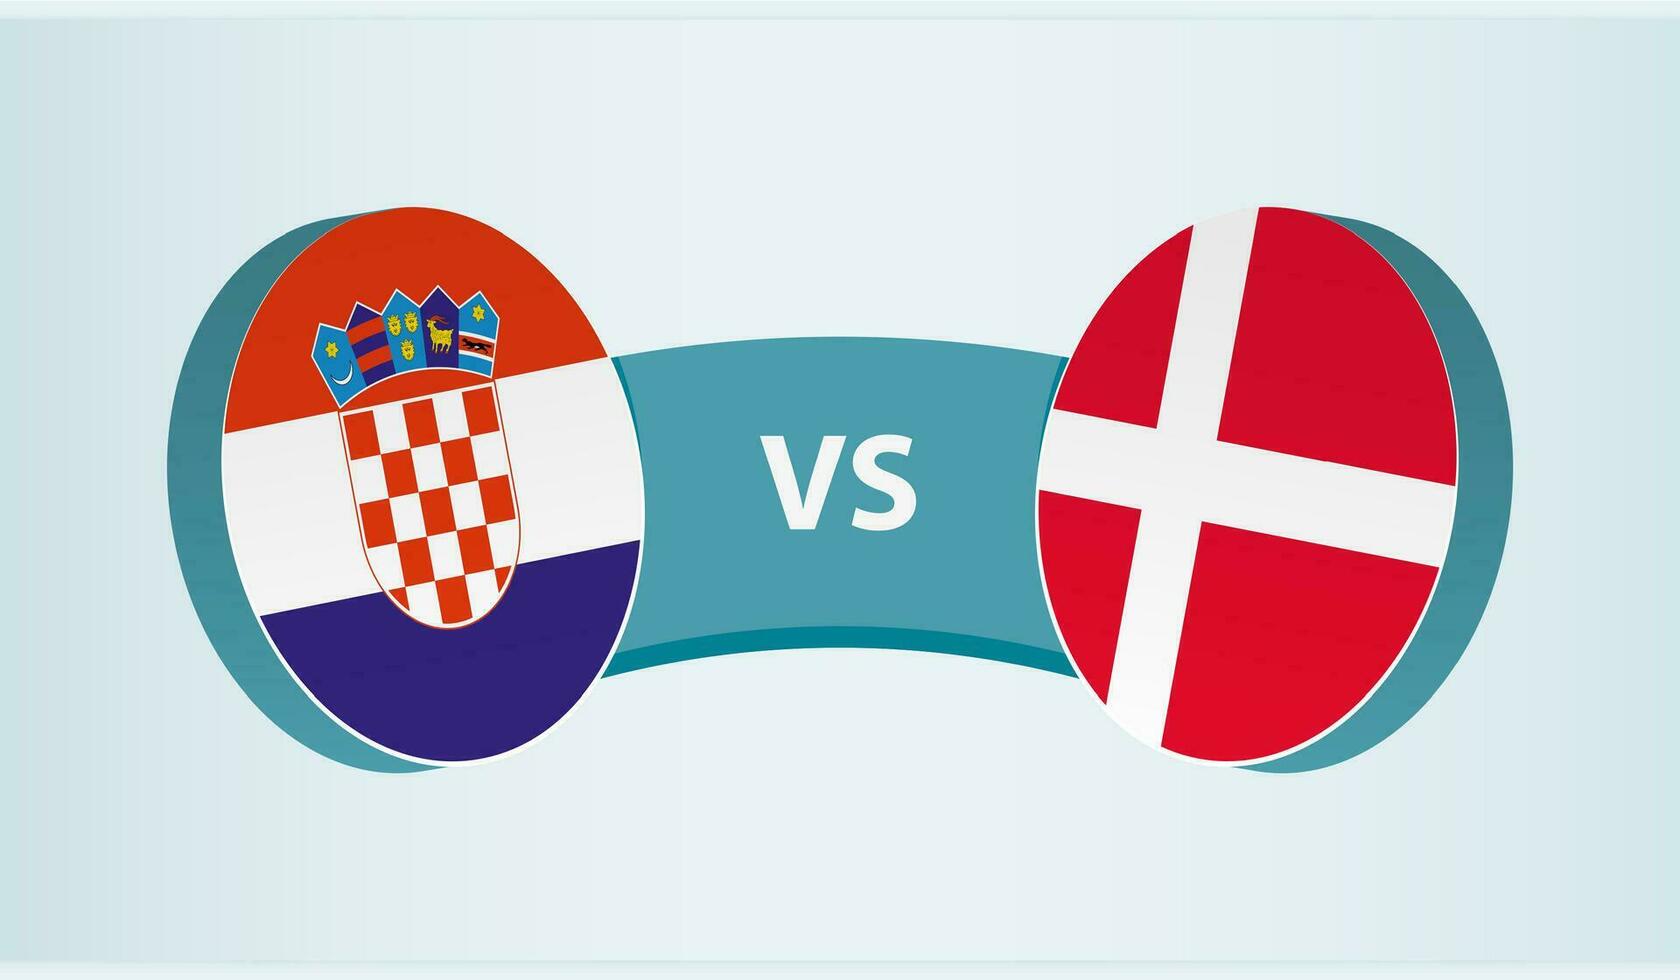 Croatia versus Denmark, team sports competition concept. vector